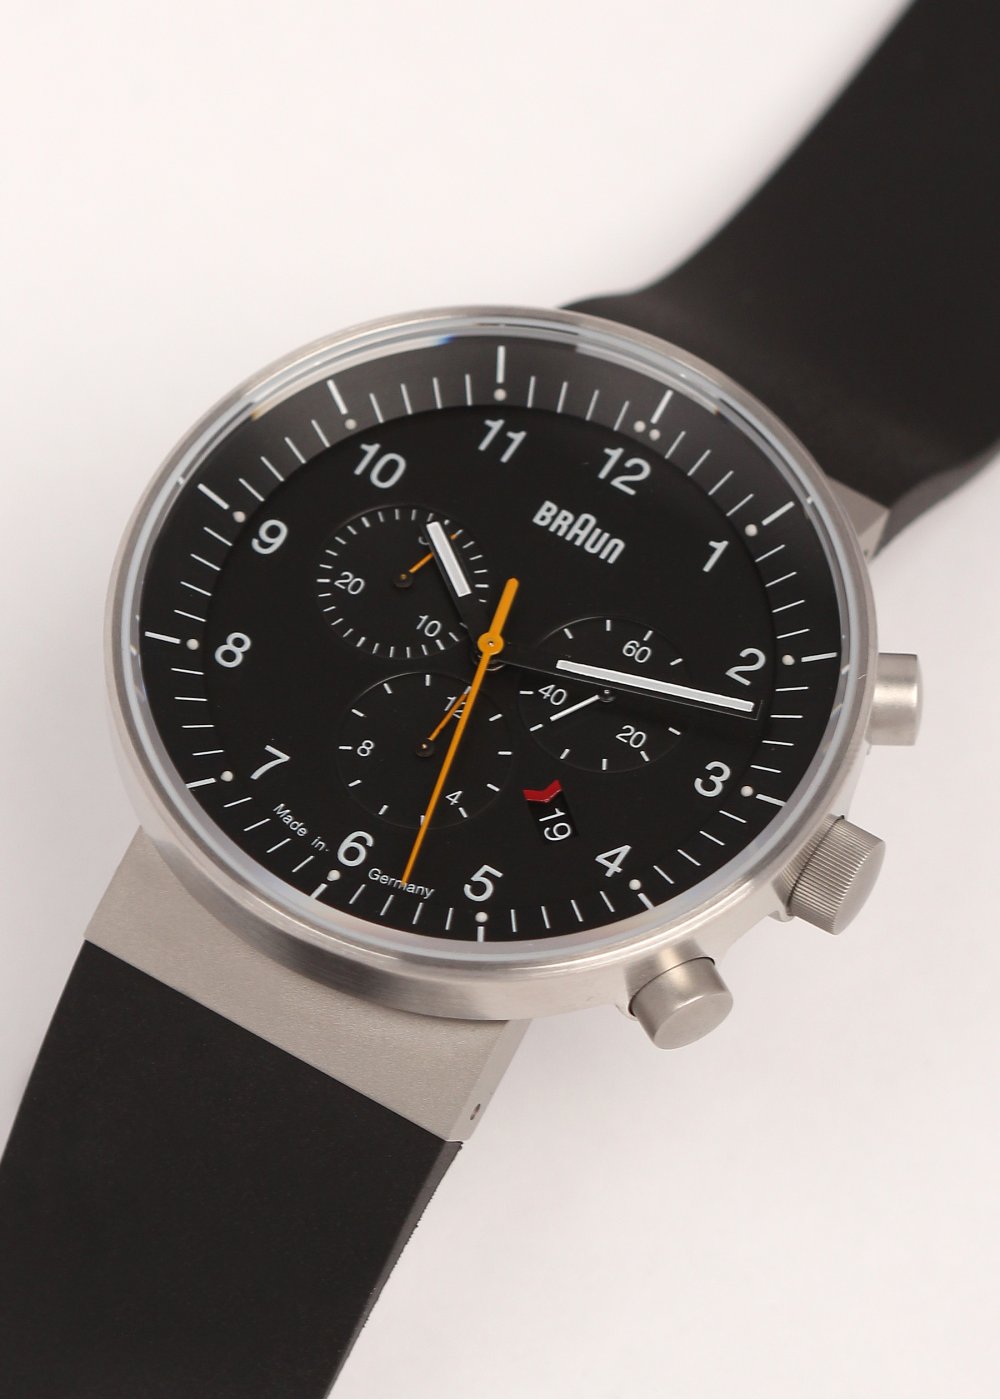 Braun Men's Quartz Watch with Black Dial Analogue Display BN0095